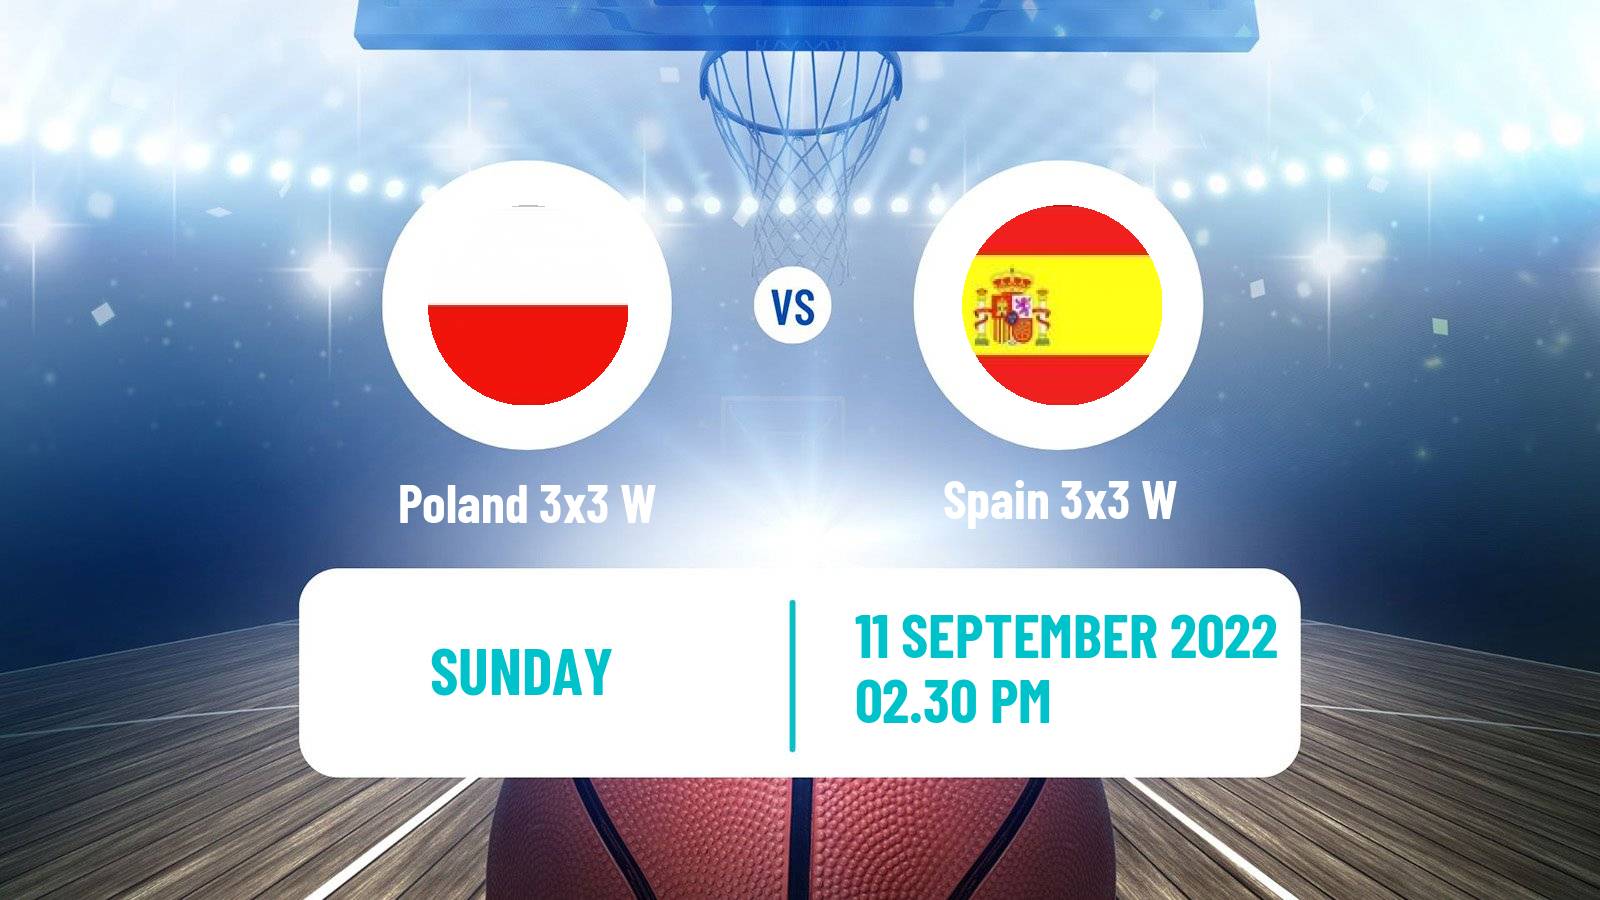 Basketball Europe Cup Basketball 3x3 Women Poland 3x3 W - Spain 3x3 W